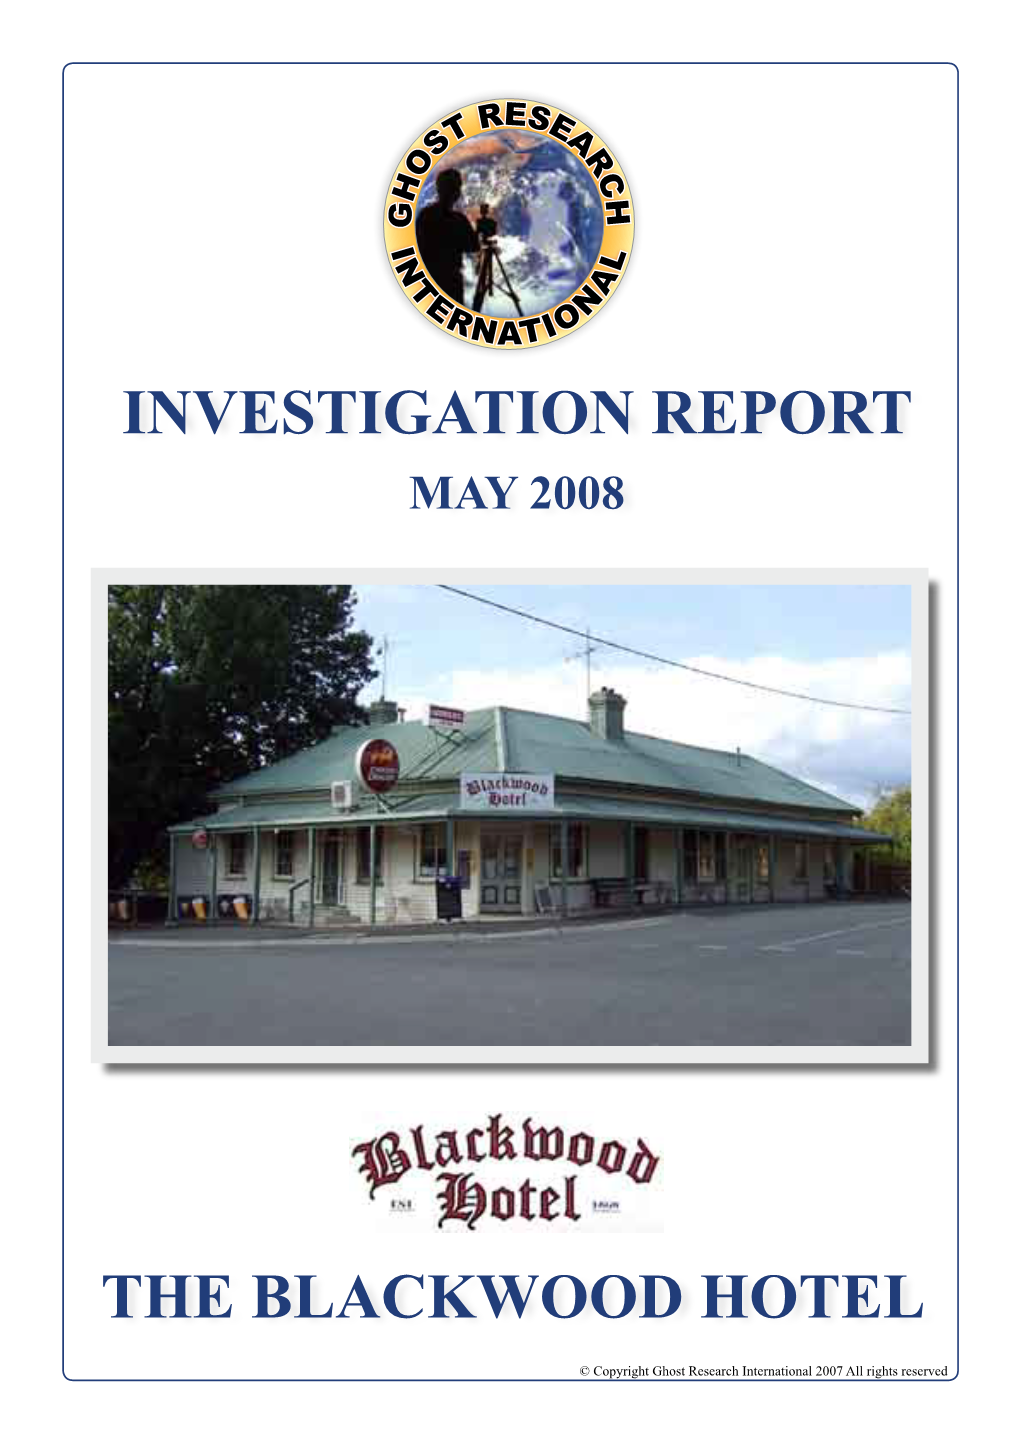 The Blackwood Hotel Investigation Report